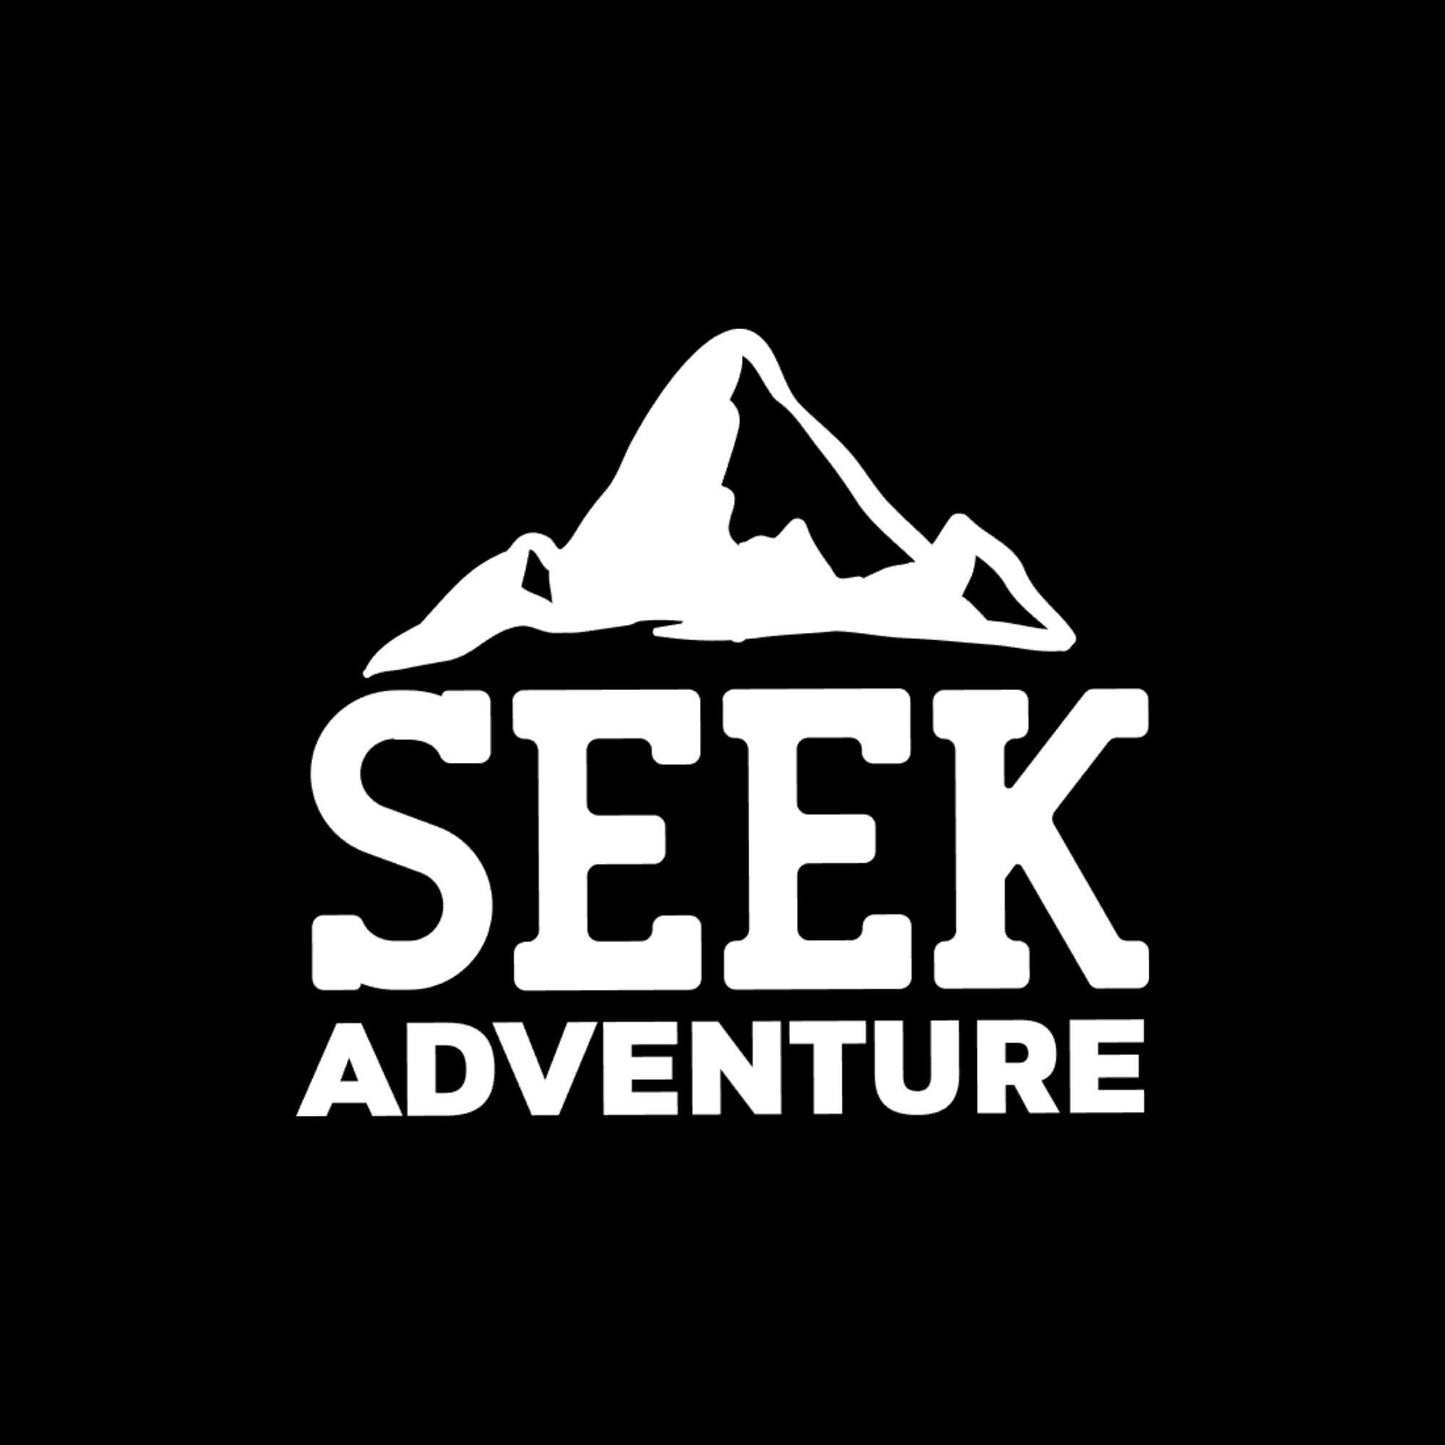 Seek Adventure Vinyl Decal White Mountains Outdoors Lover Car Water Bottle Laptop Sticker